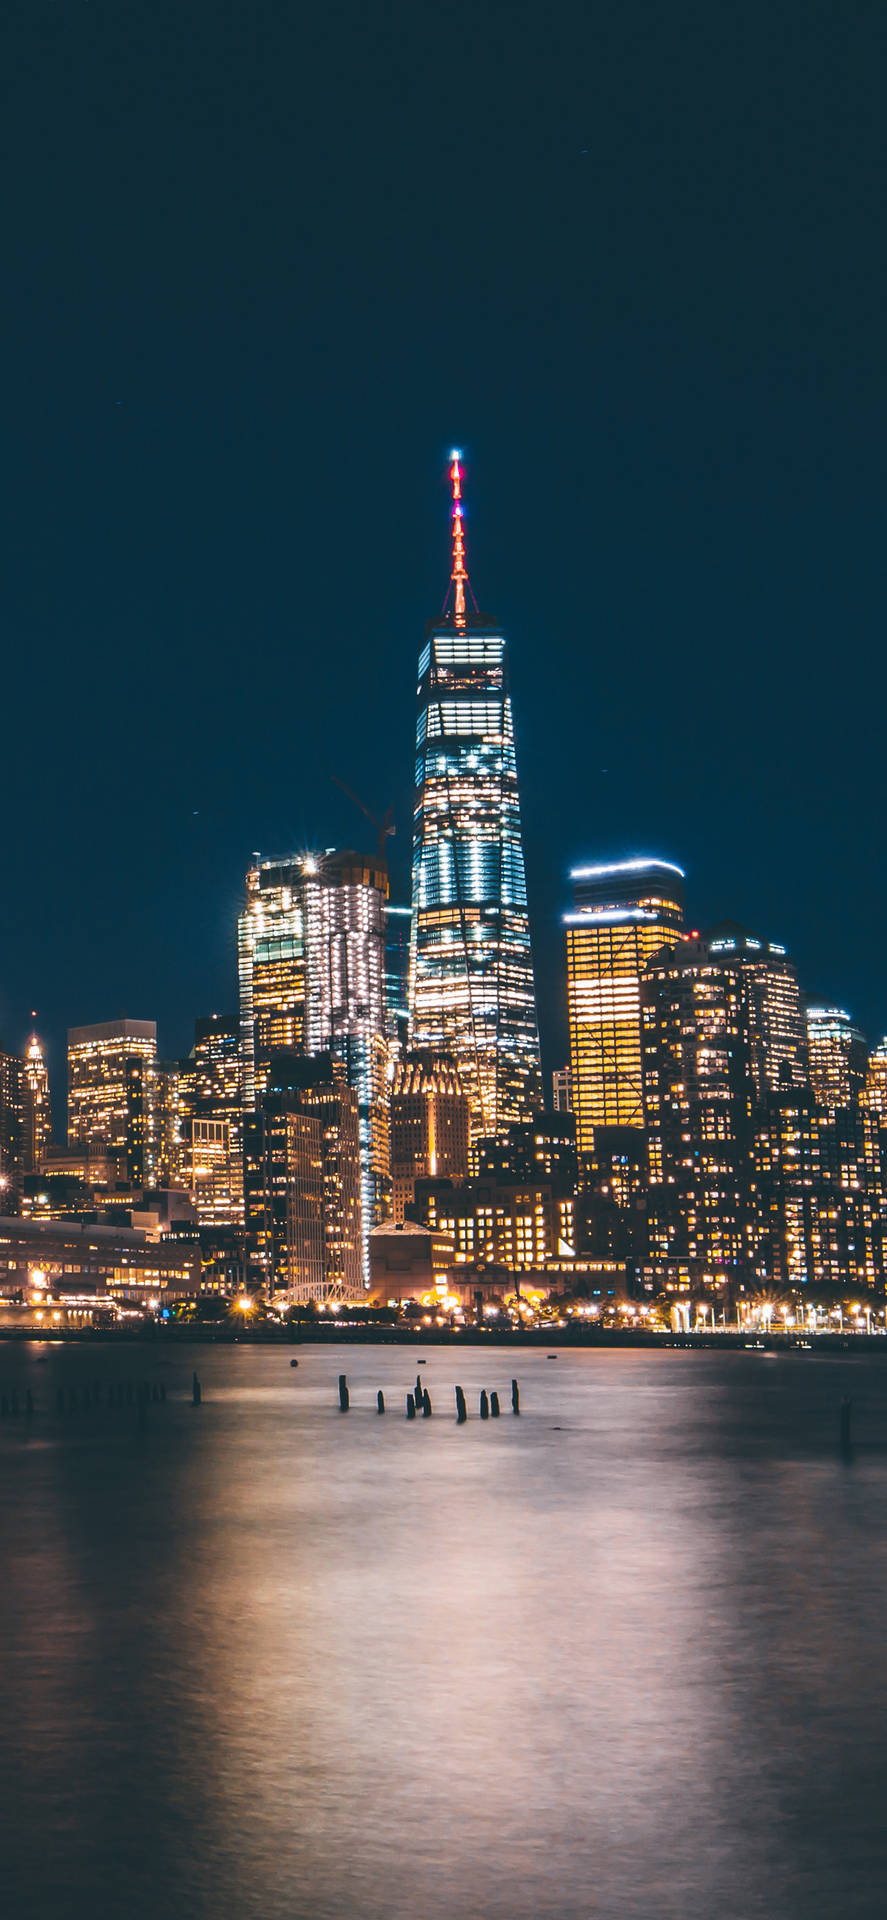 Cool iPhone XS Max New York Night Wallpaper